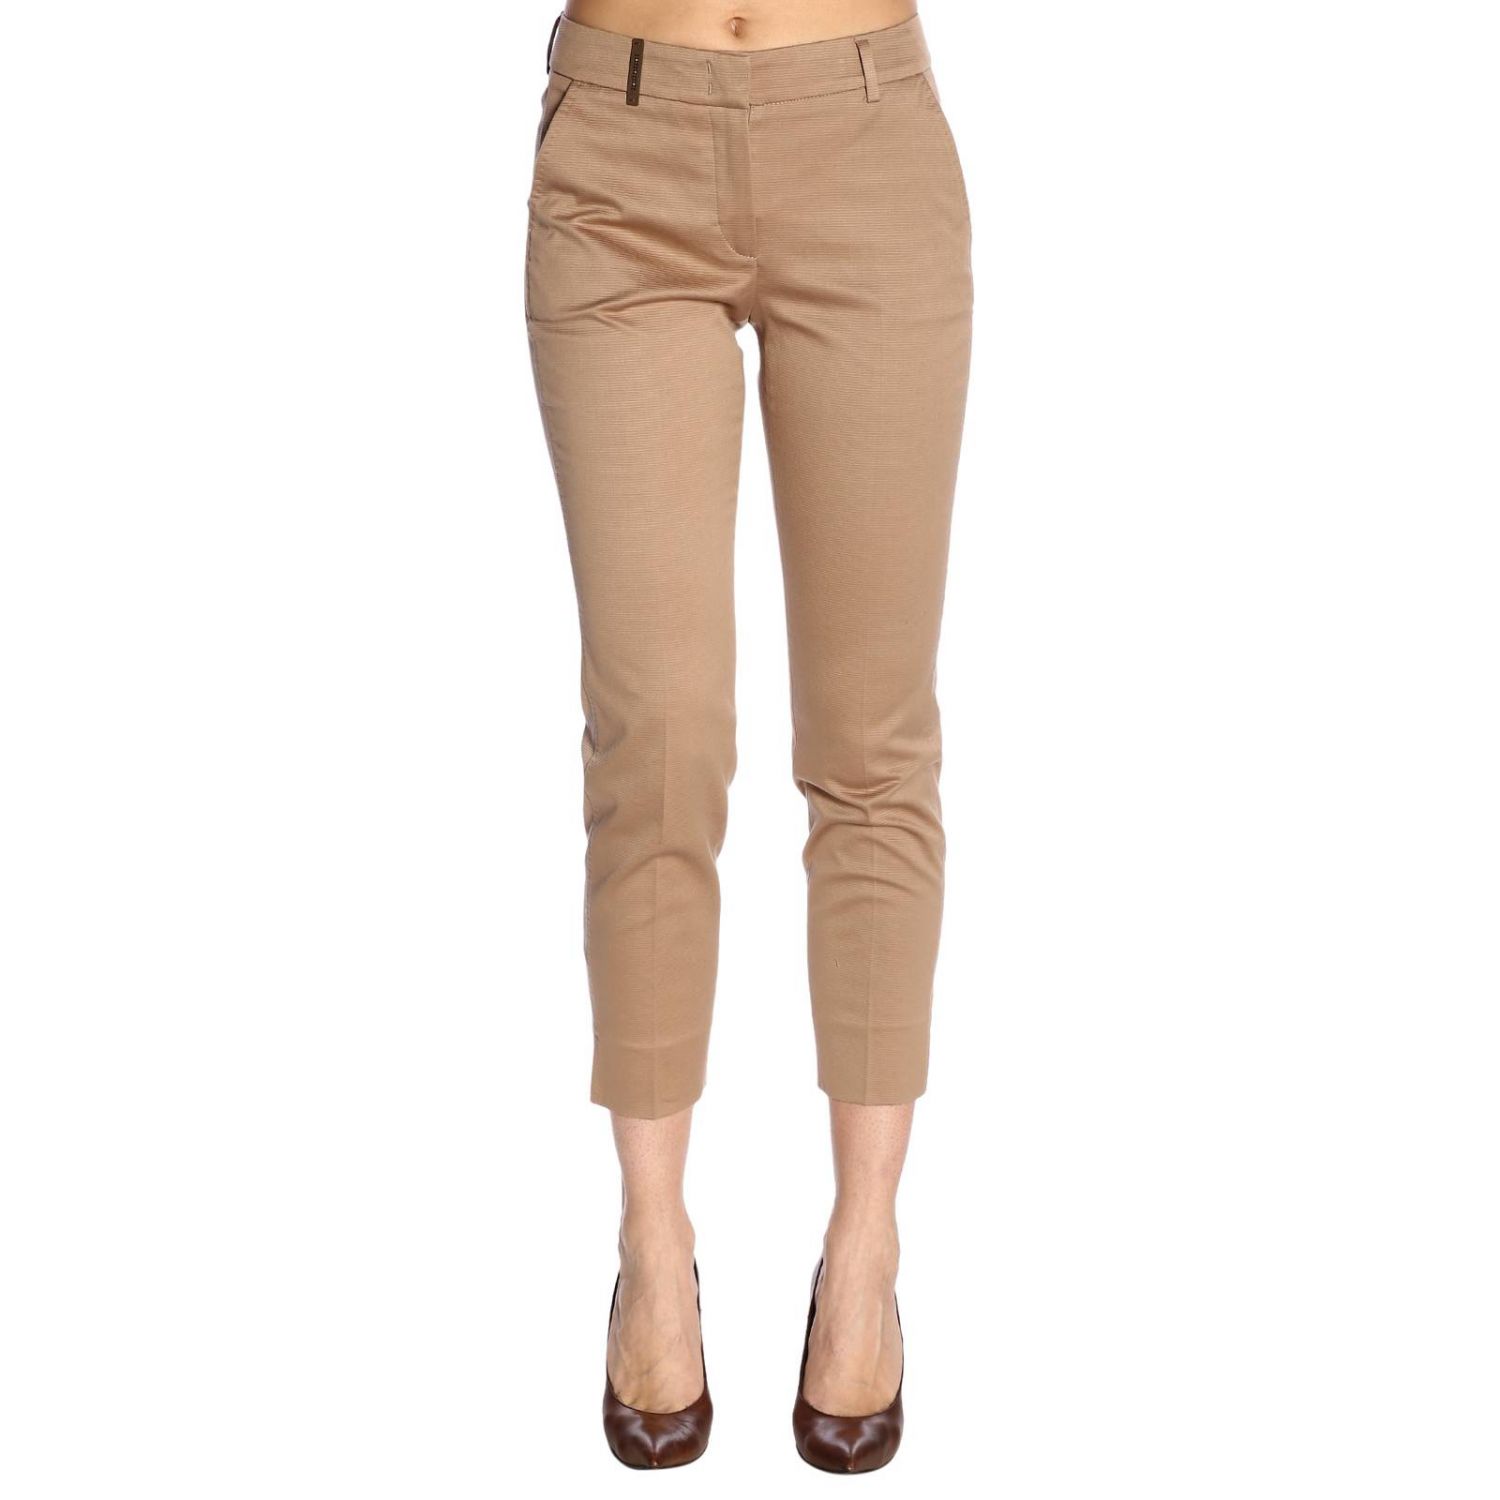 Peserico Outlet: pants for woman - Hazel | Peserico pants P04718 6494 ...